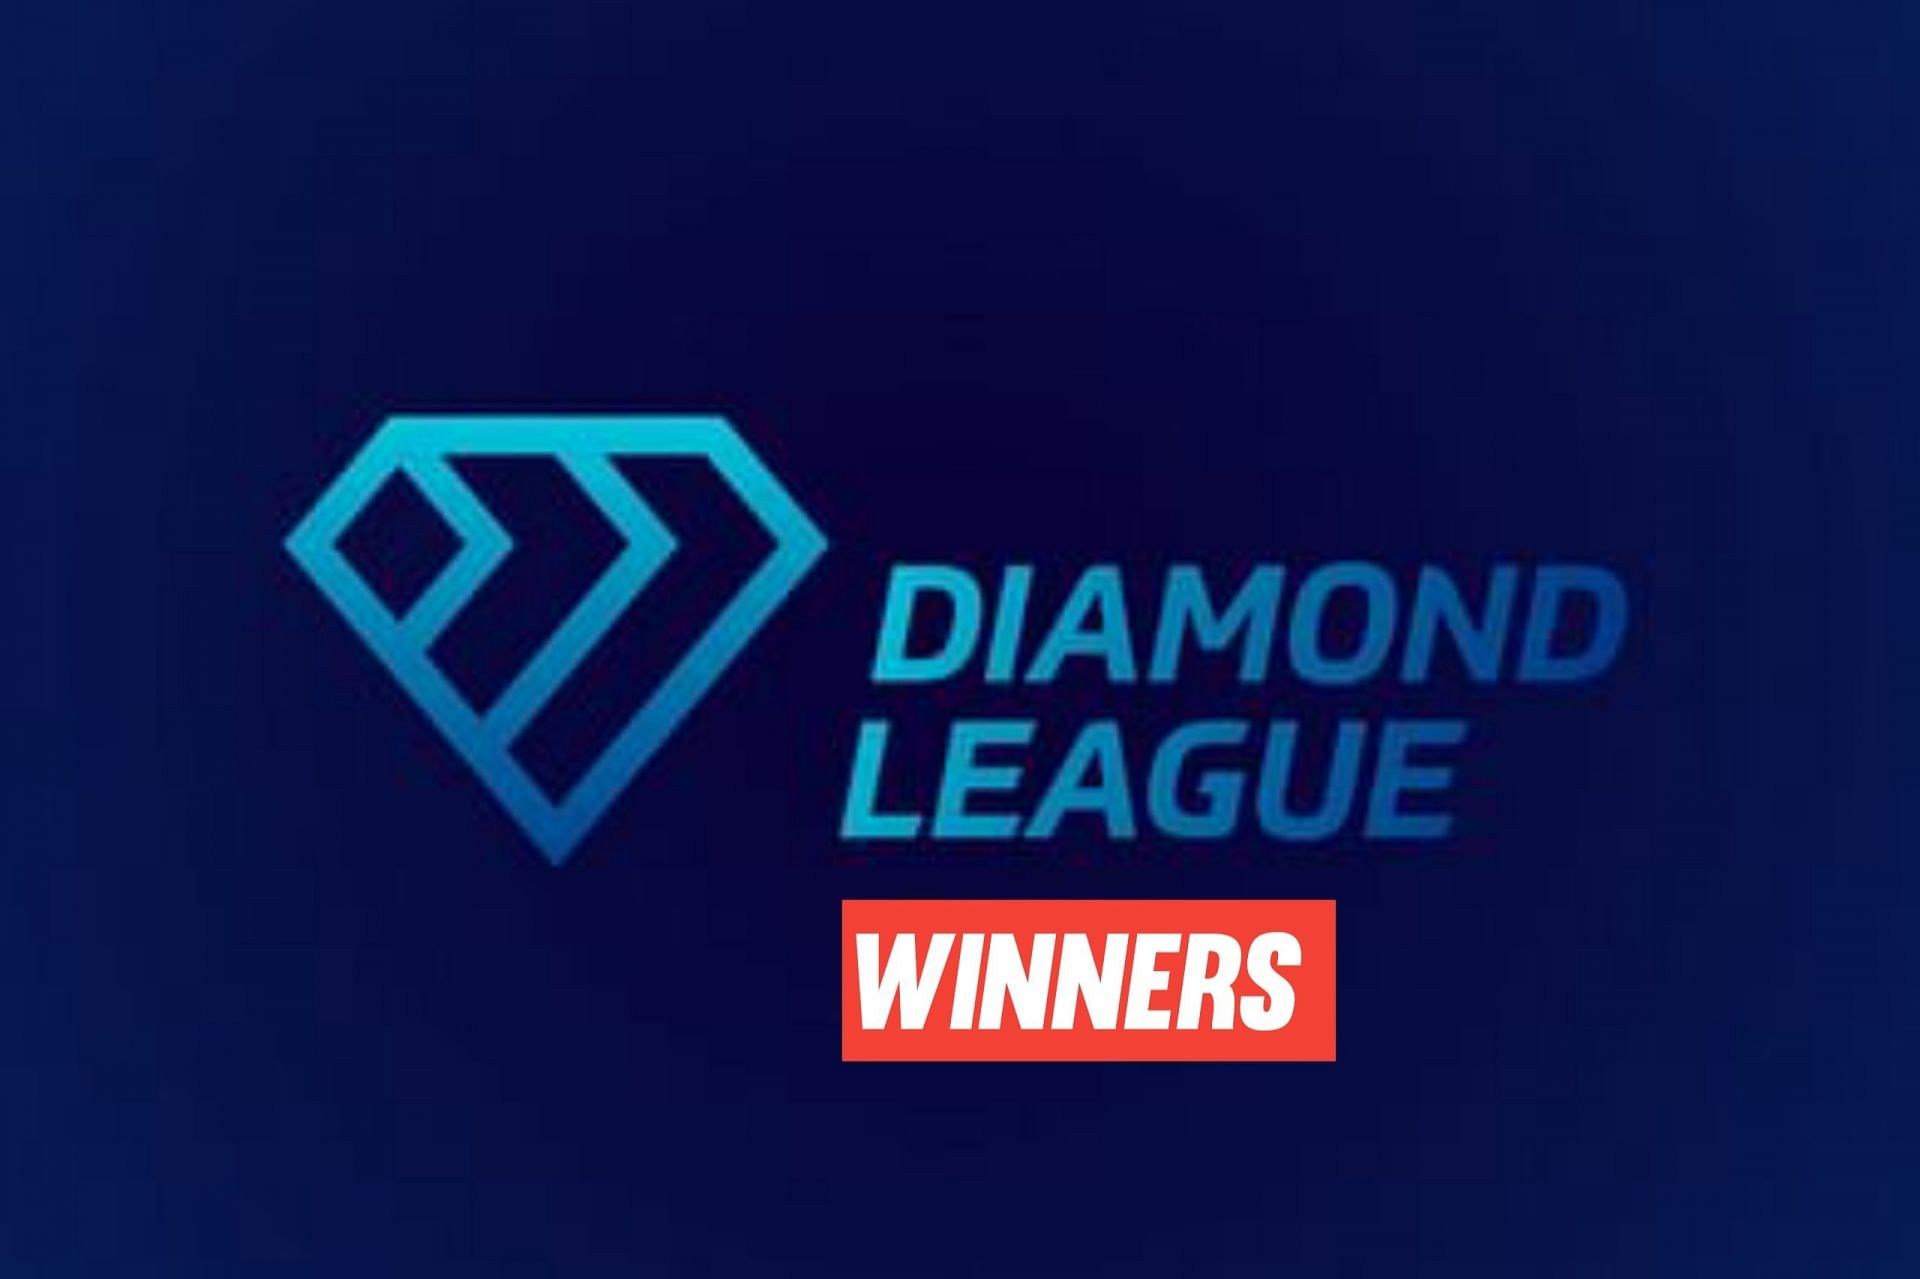 Zurich Diamond League 2022 Final Complete list of winners